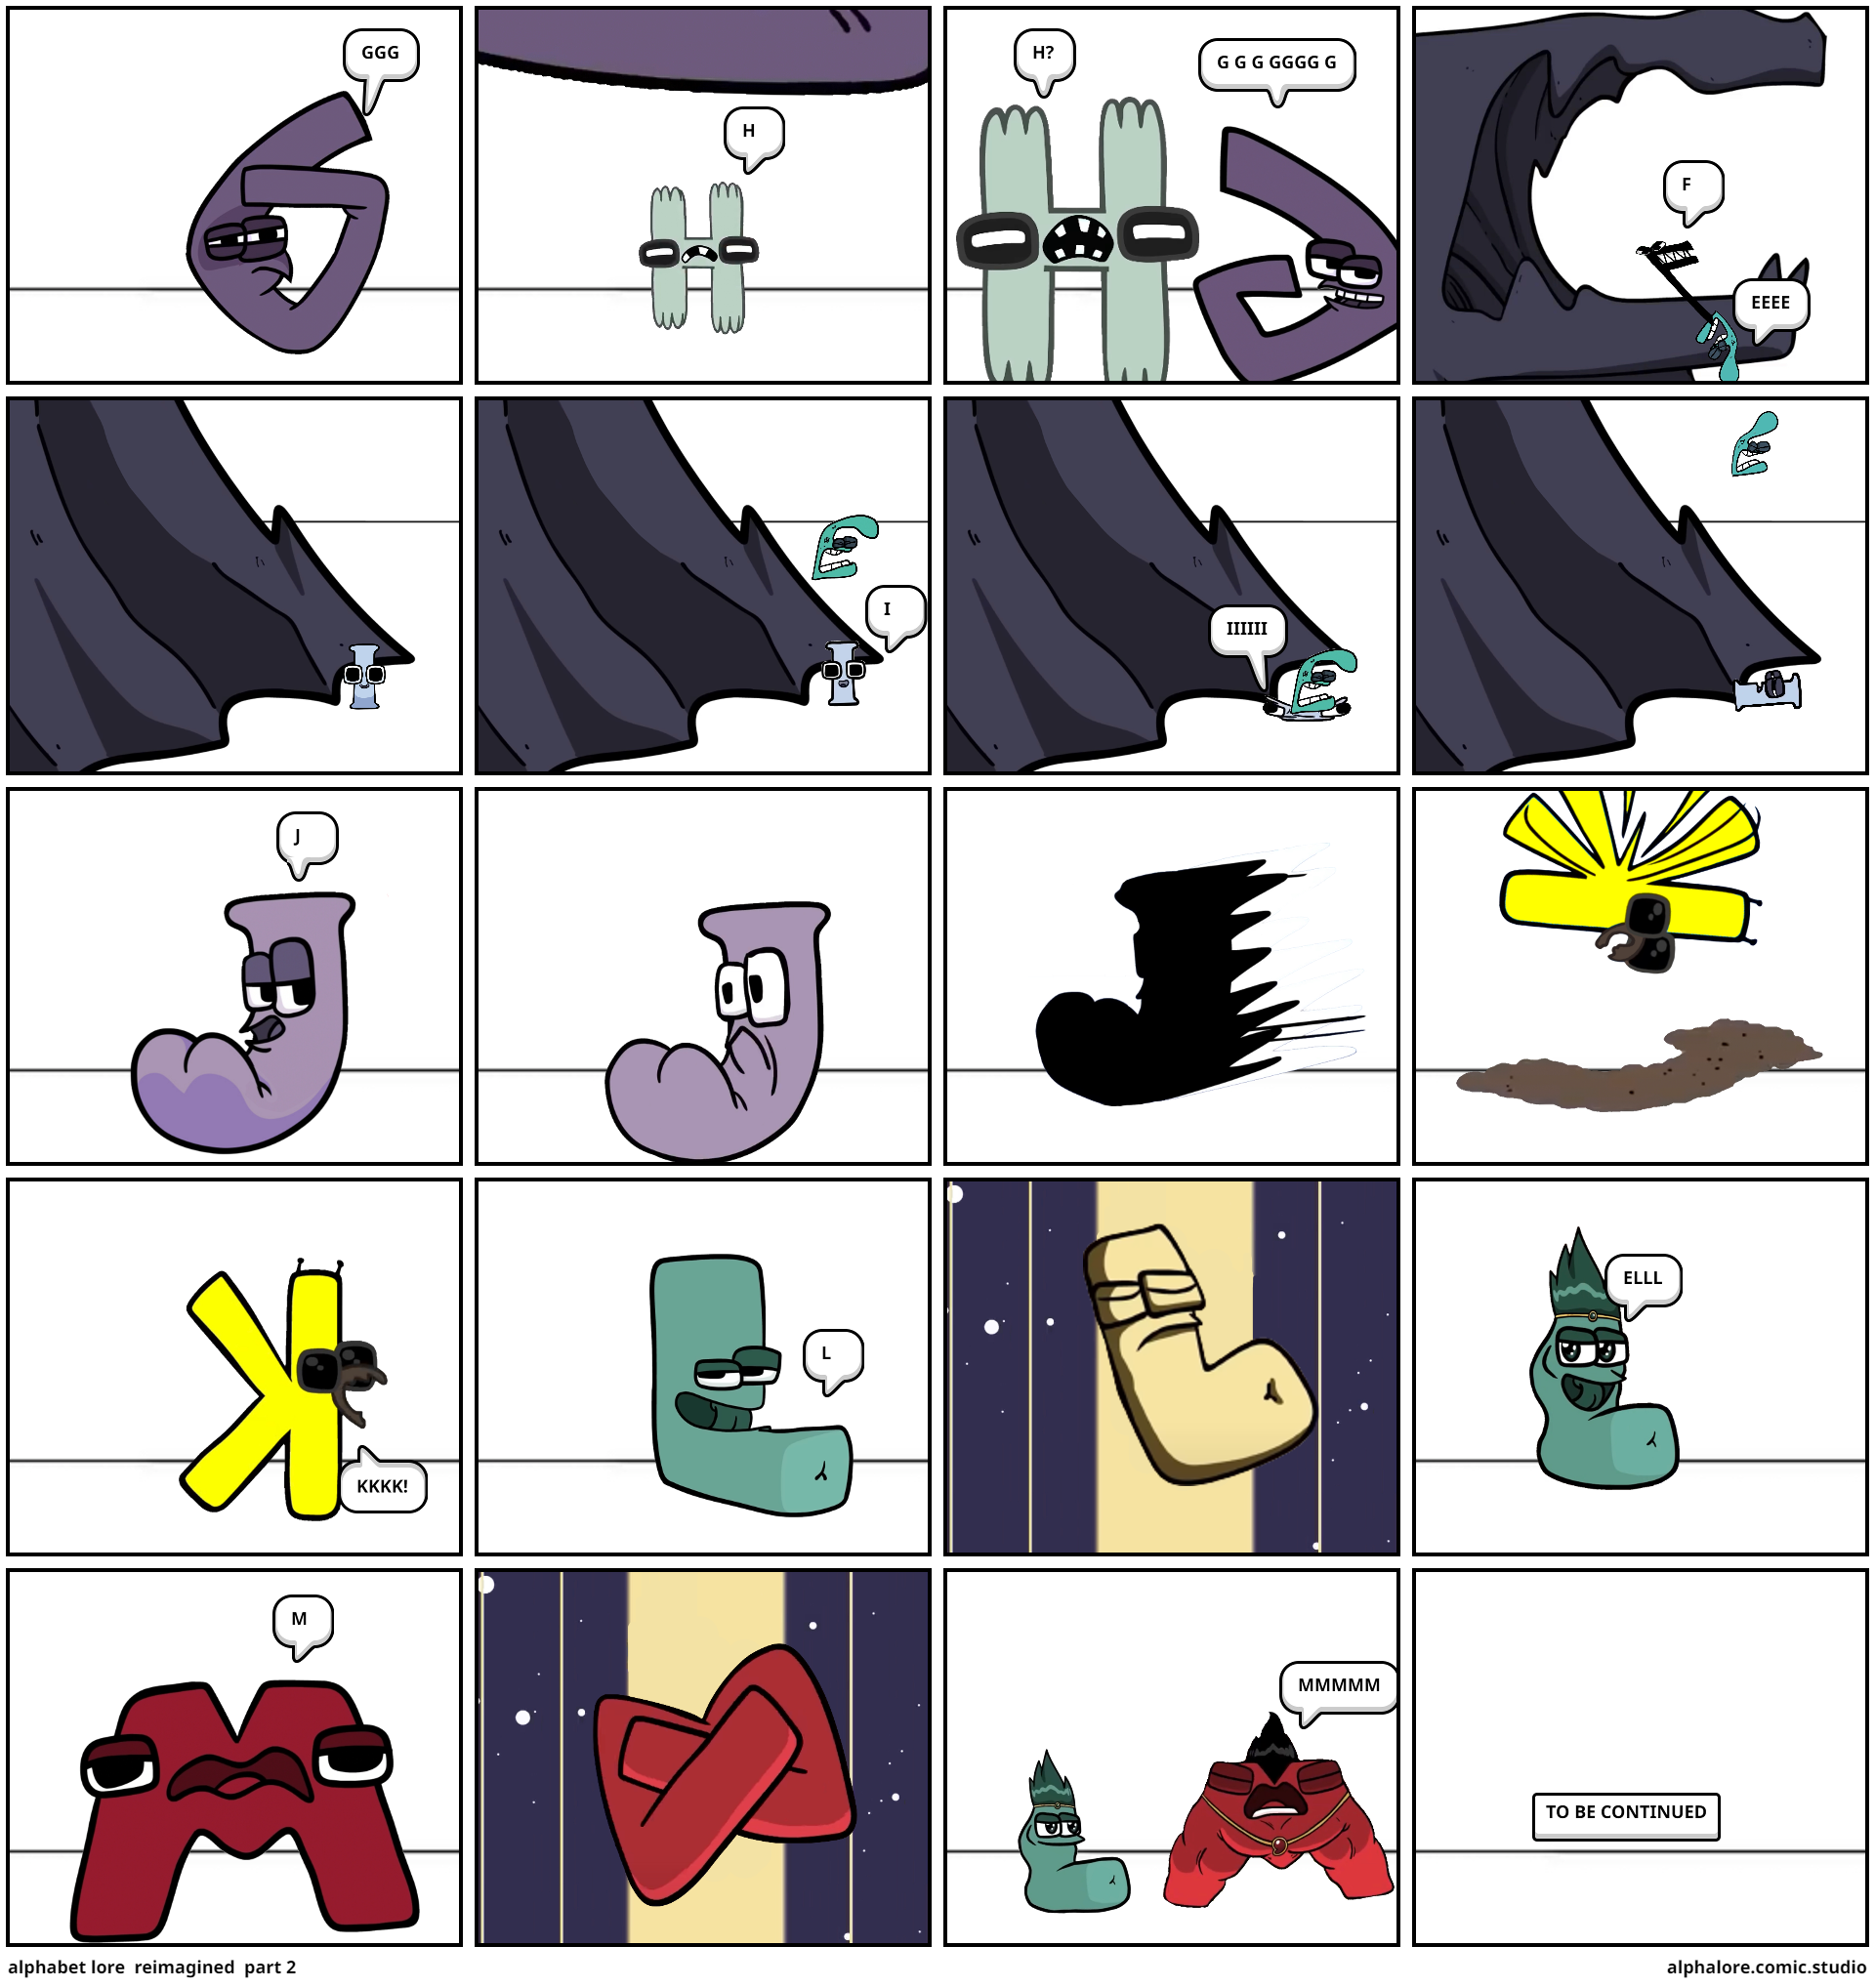 A part of the alphabet lore movie part 2 - Comic Studio